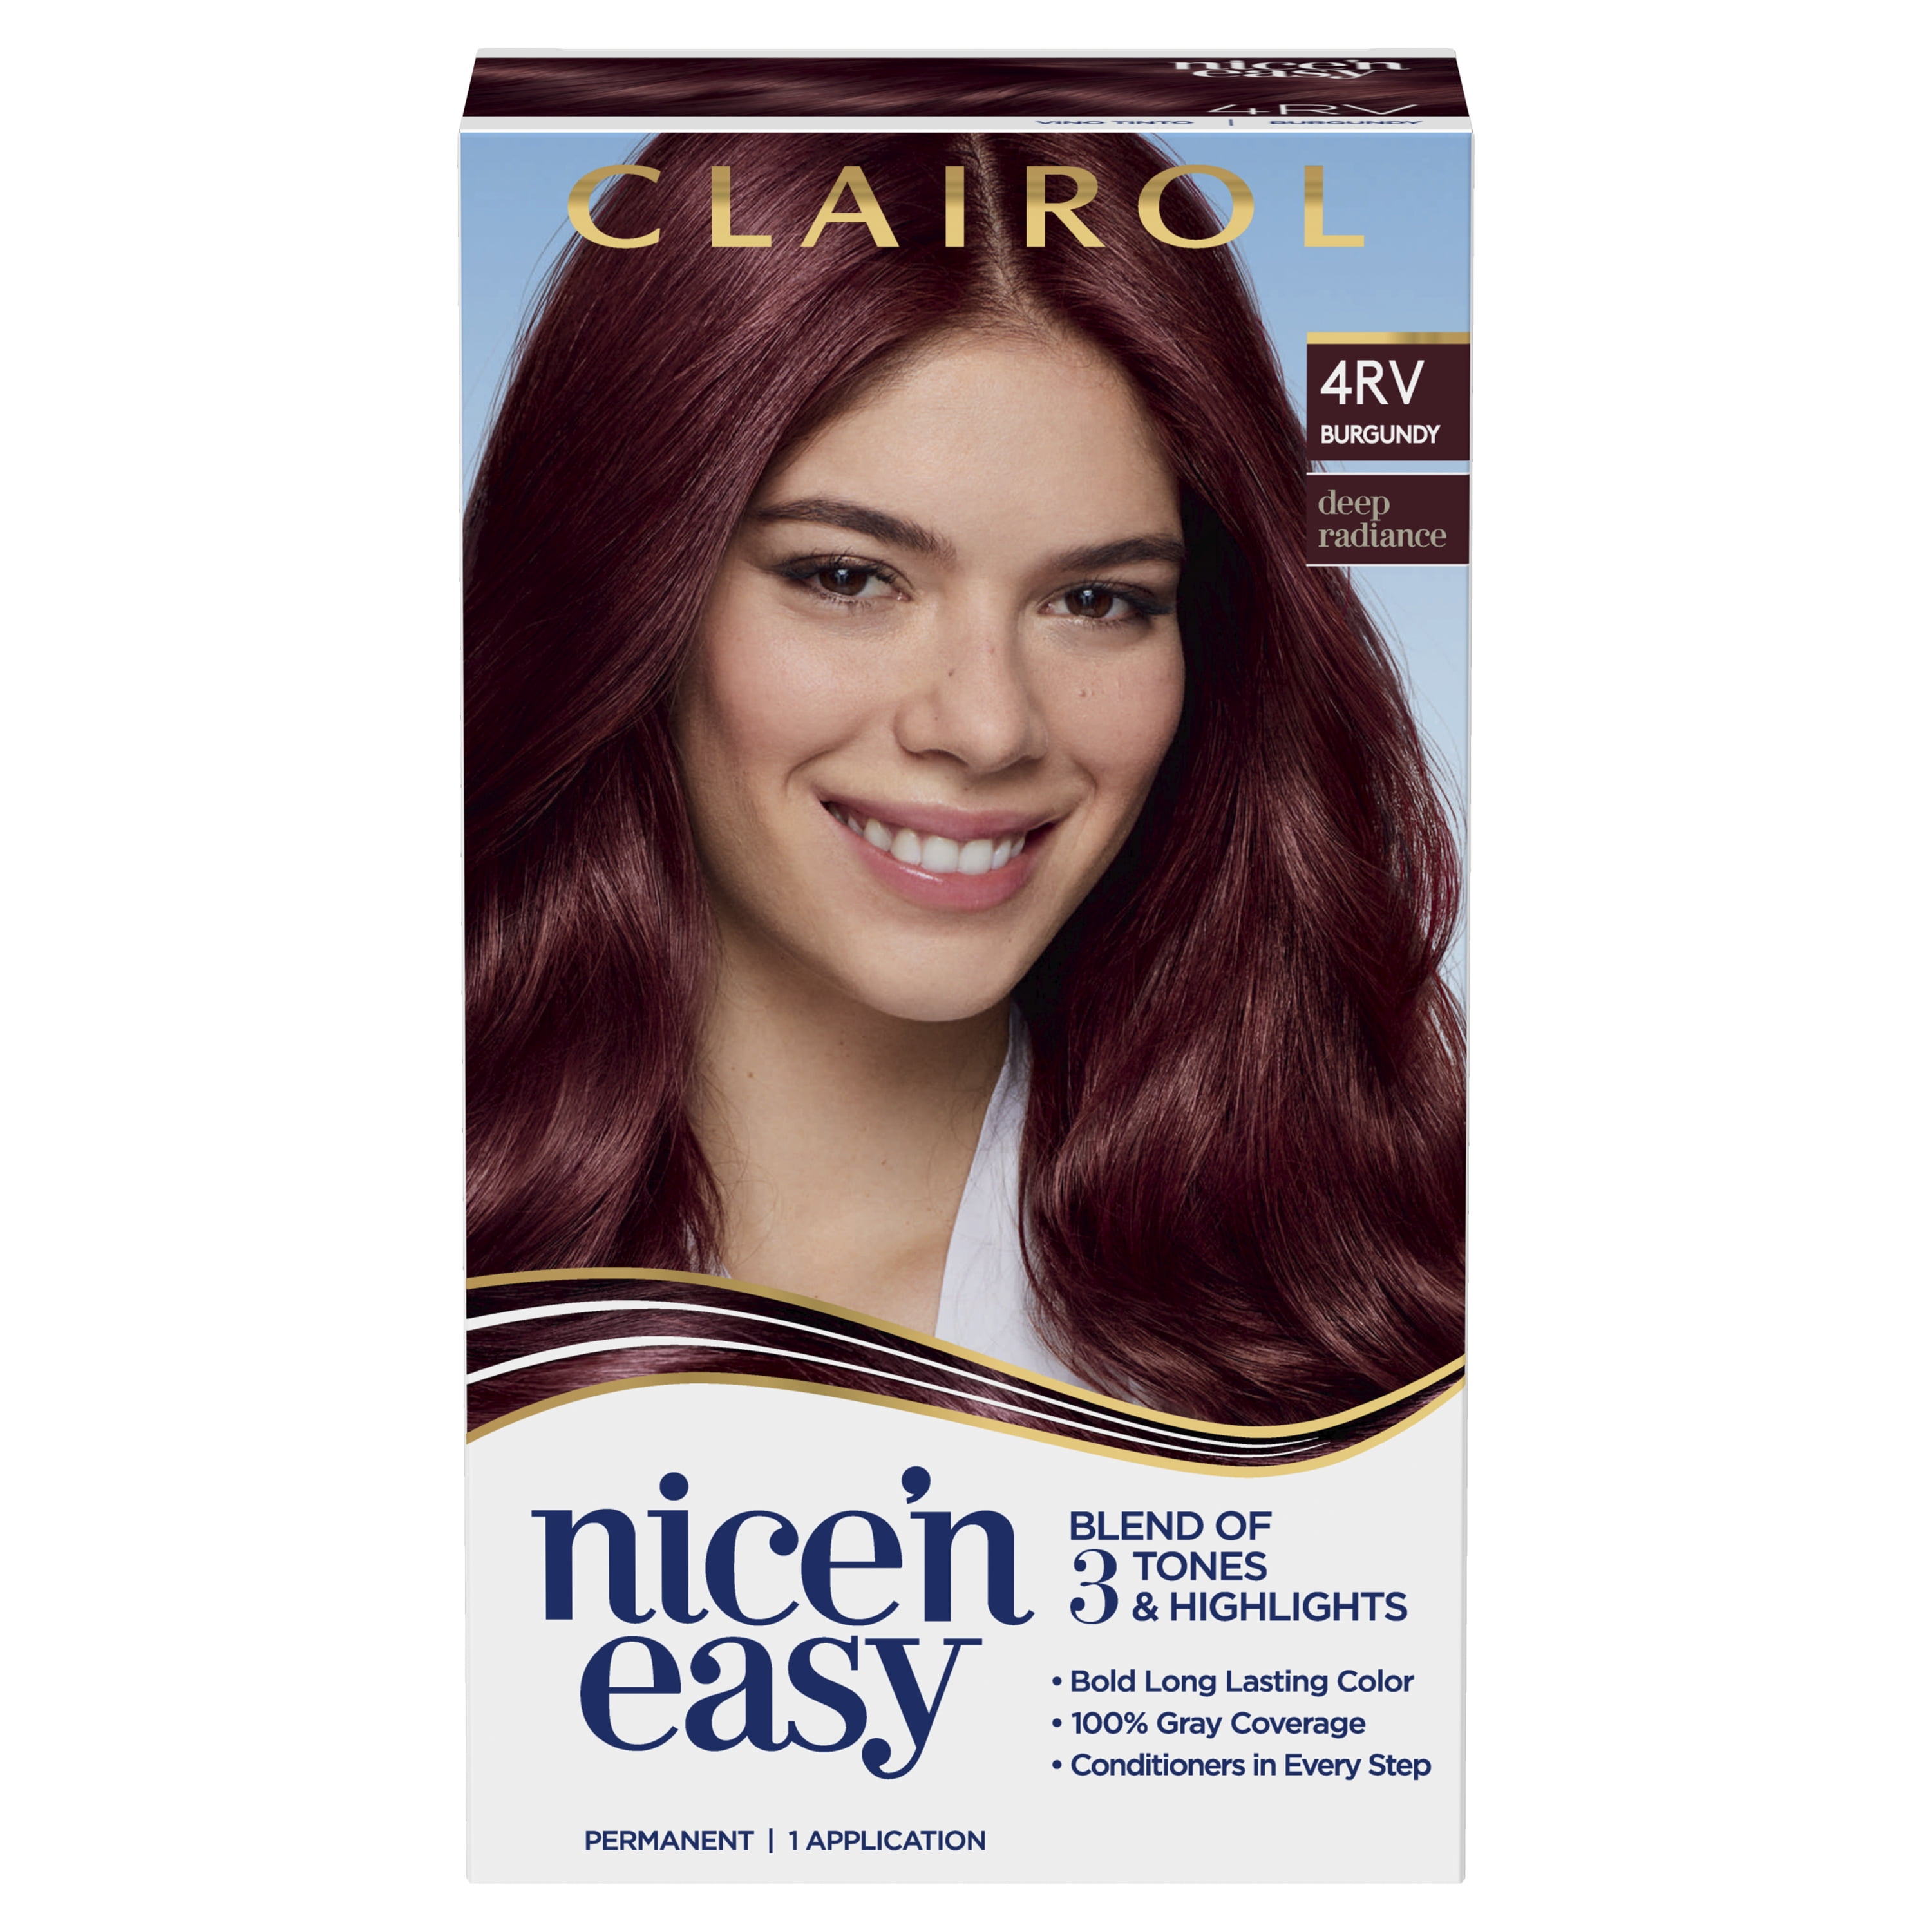 Clairol Nice'n Easy Permanent Hair Color Creme, 4R Dark Auburn, 1  Application, Hair Dye 